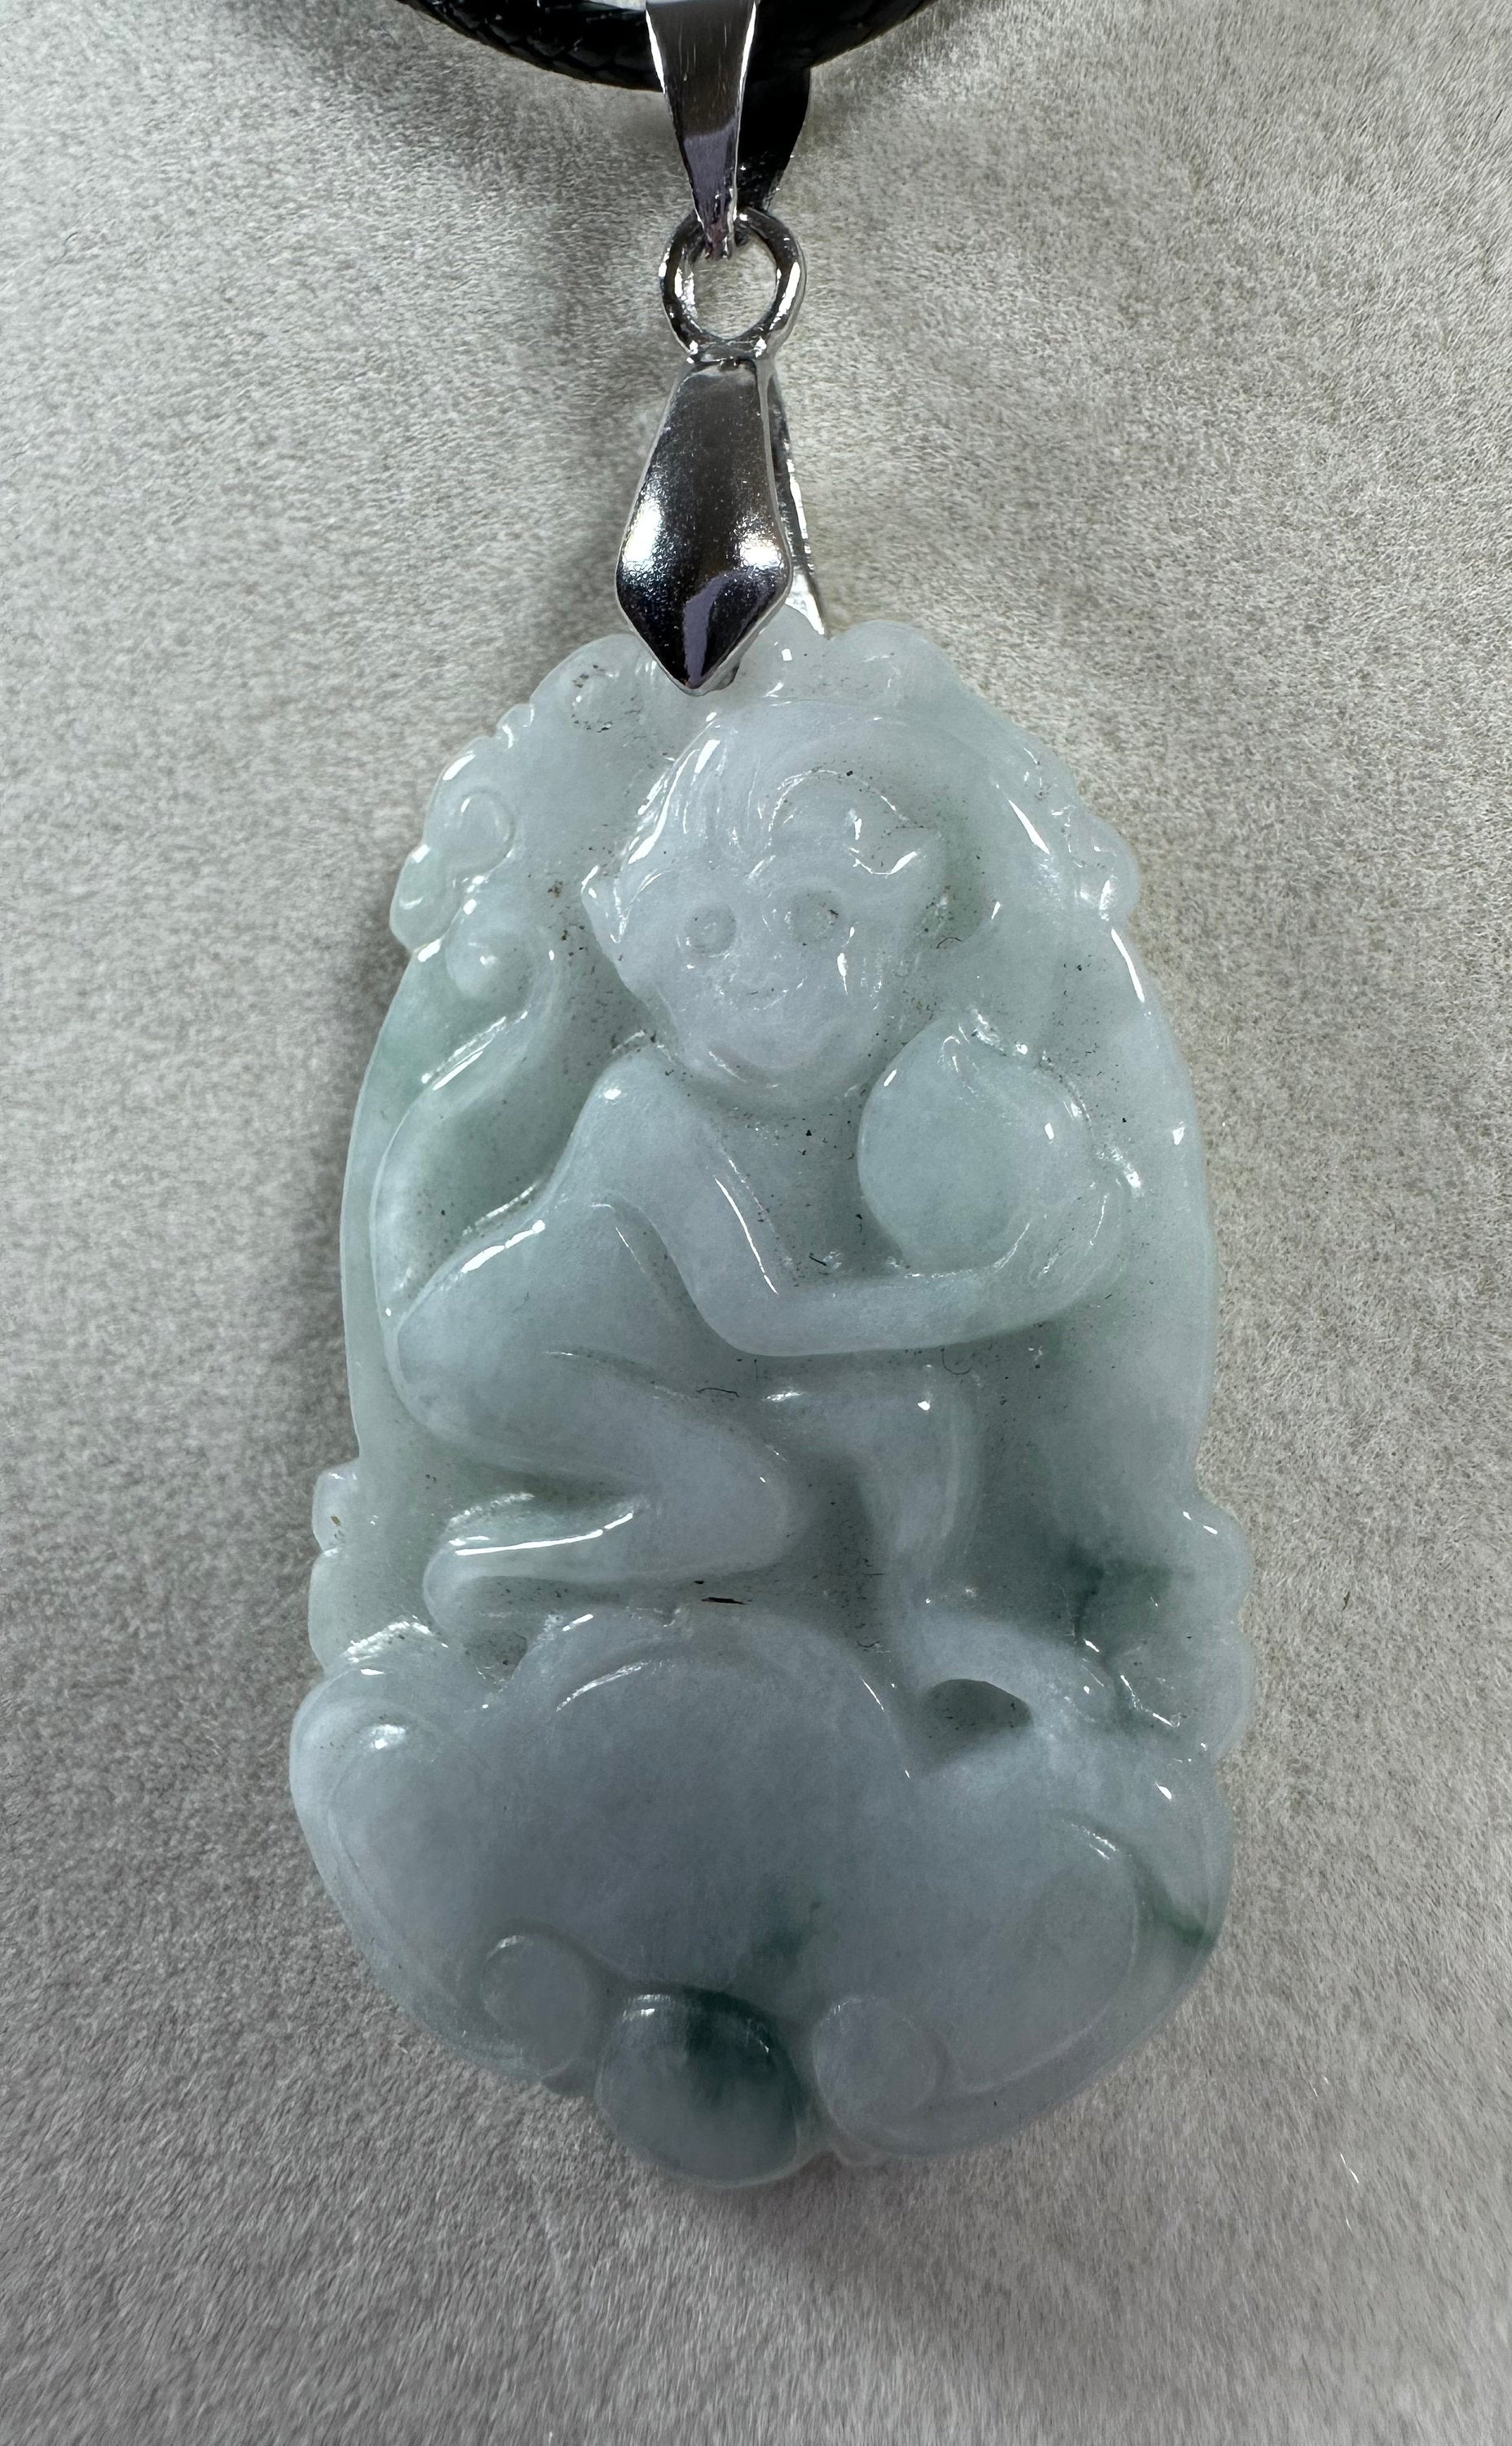 Jade Chinese Zodiac Pendant. Monkey Pendant in Natural Jade.